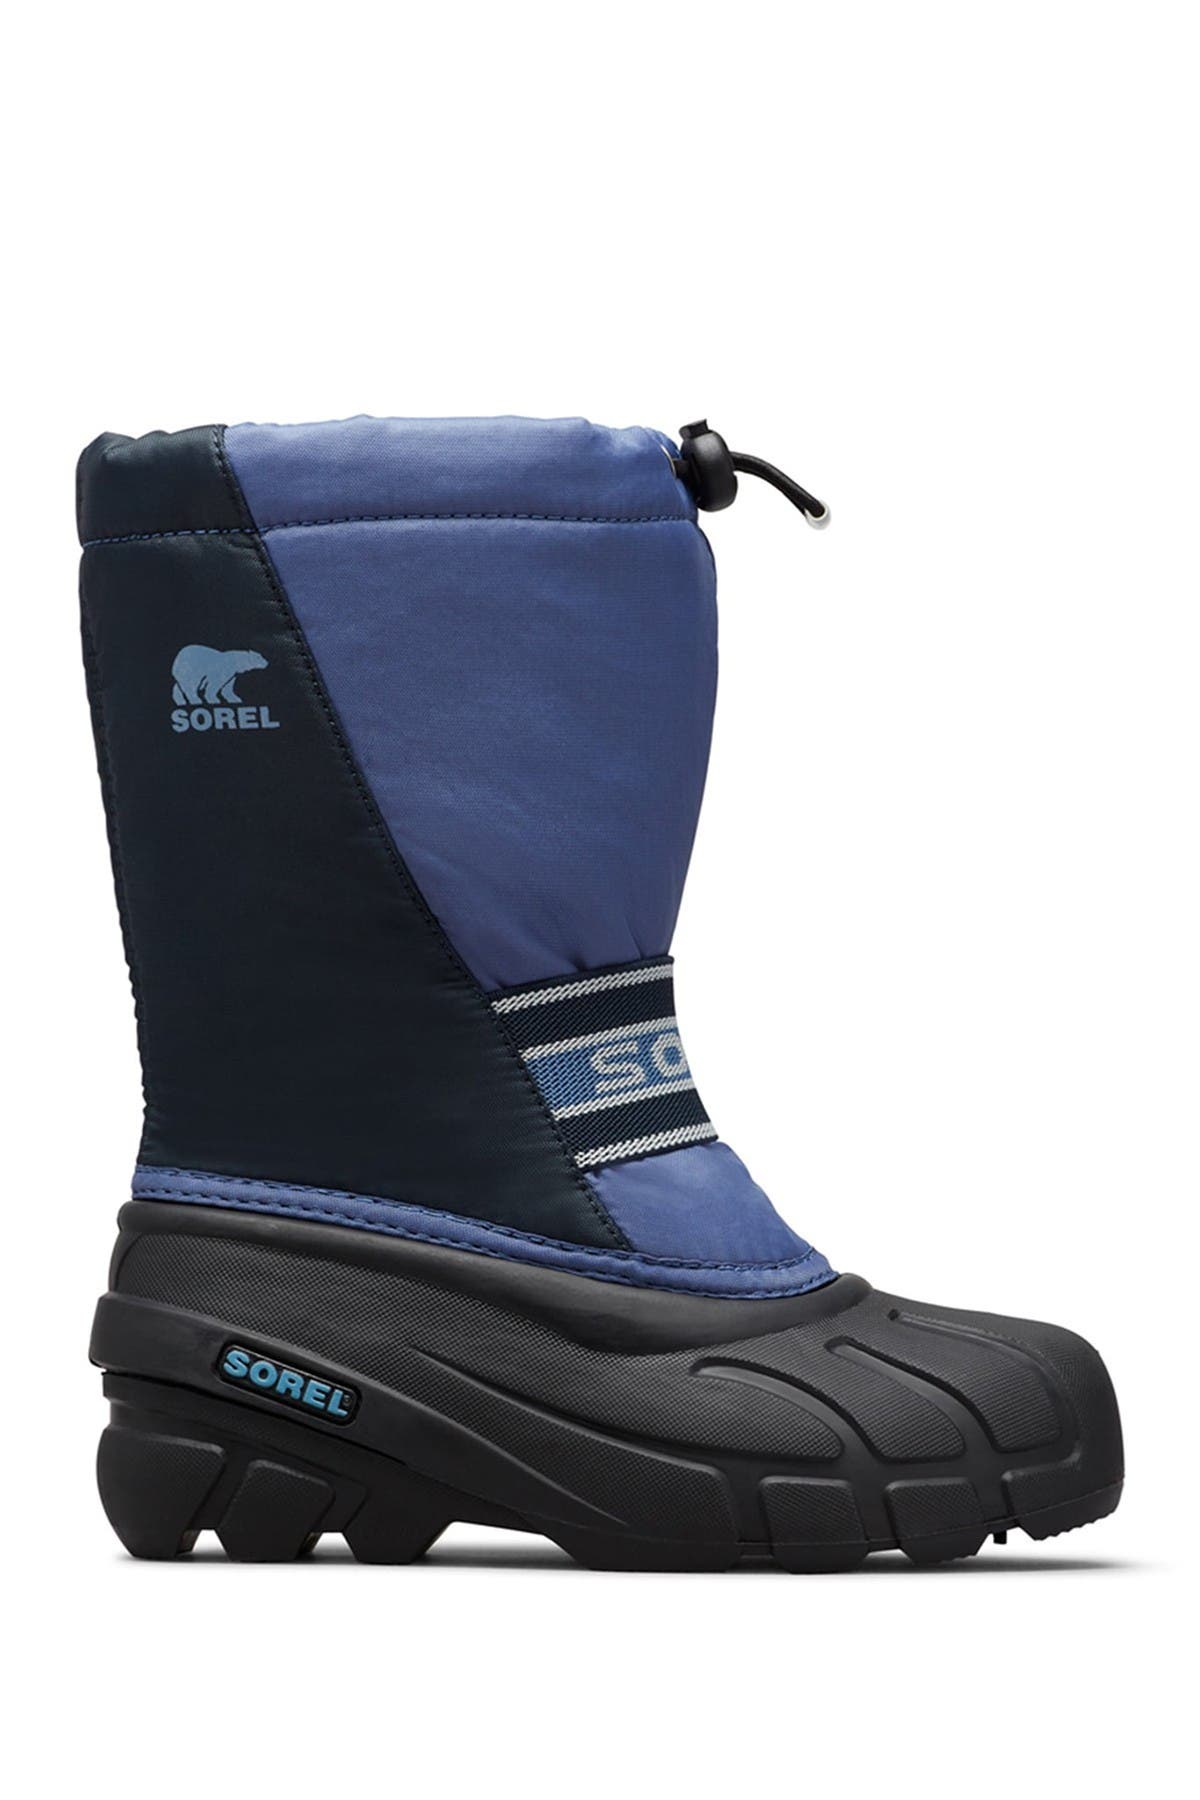 sorel water boots